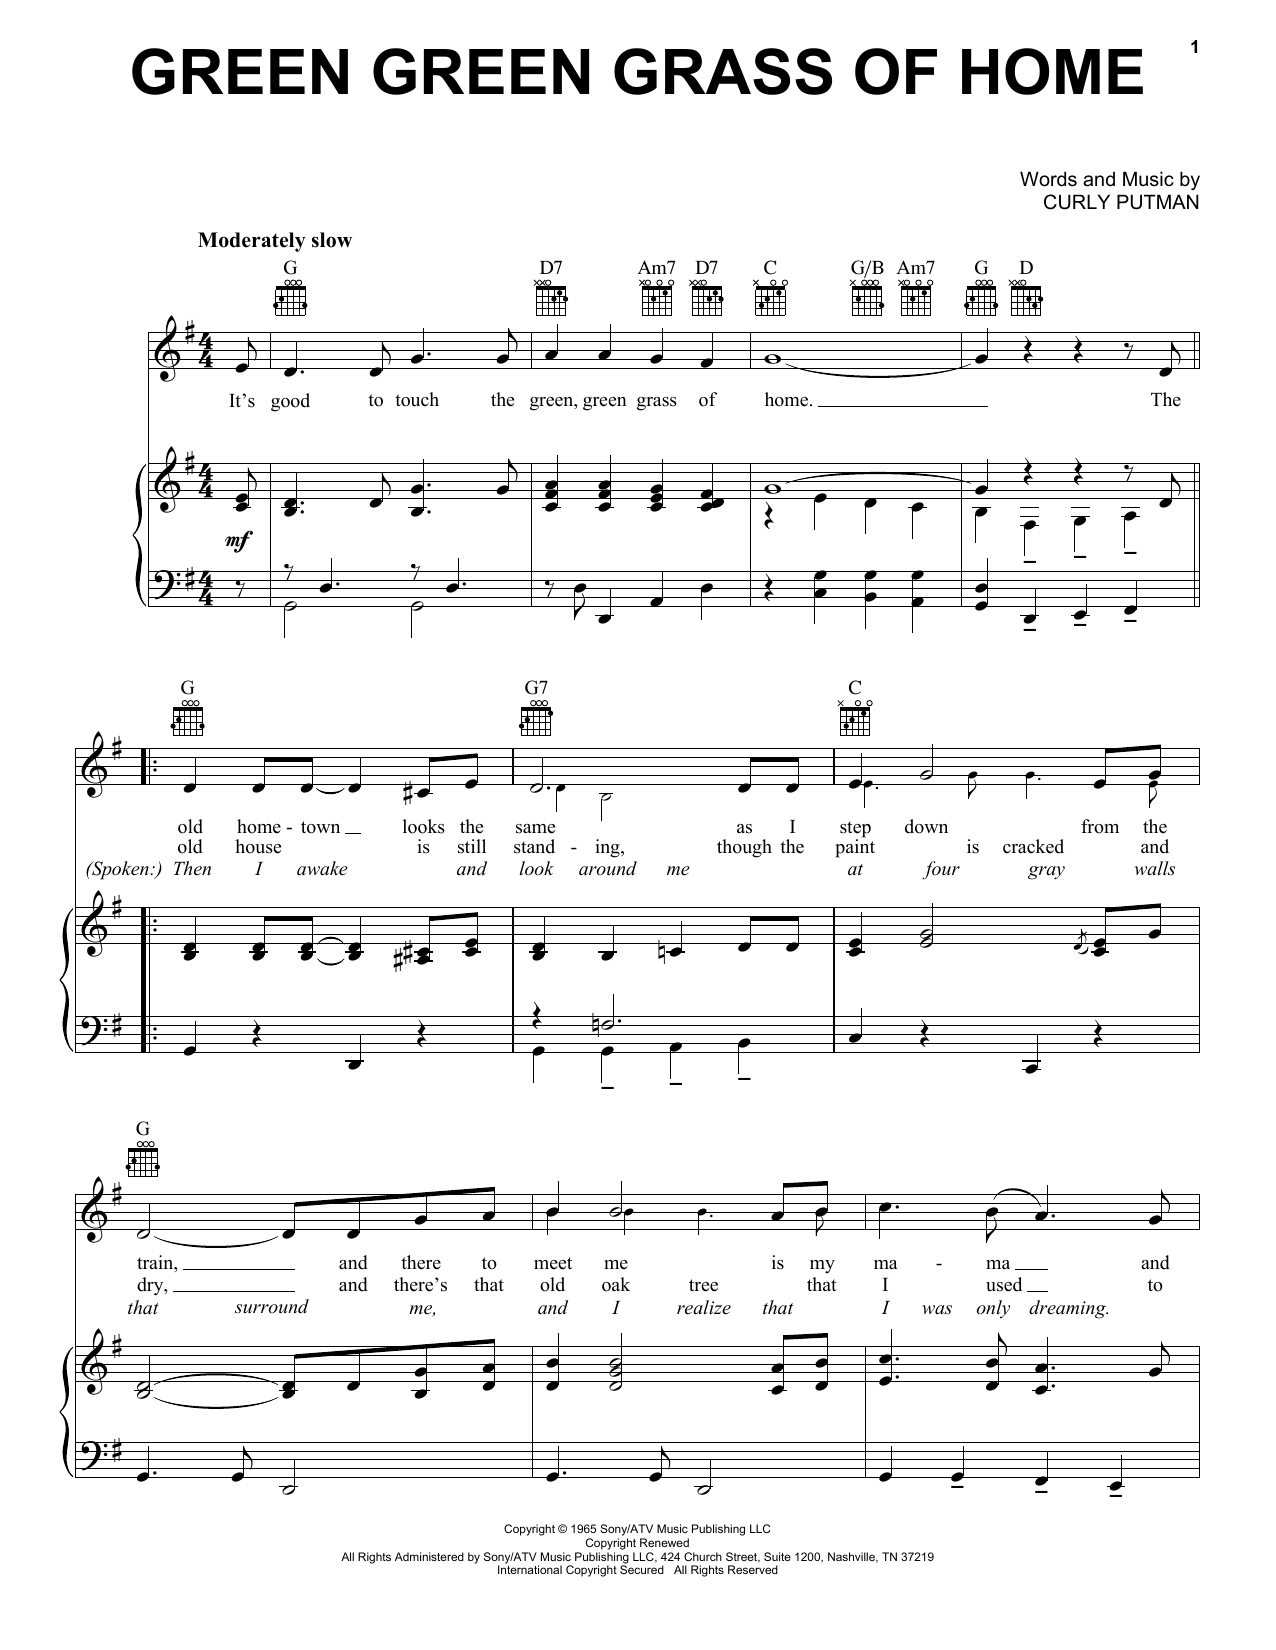 Porter Wagoner Green Green Grass Of Home Sheet Music Notes & Chords for Ukulele - Download or Print PDF